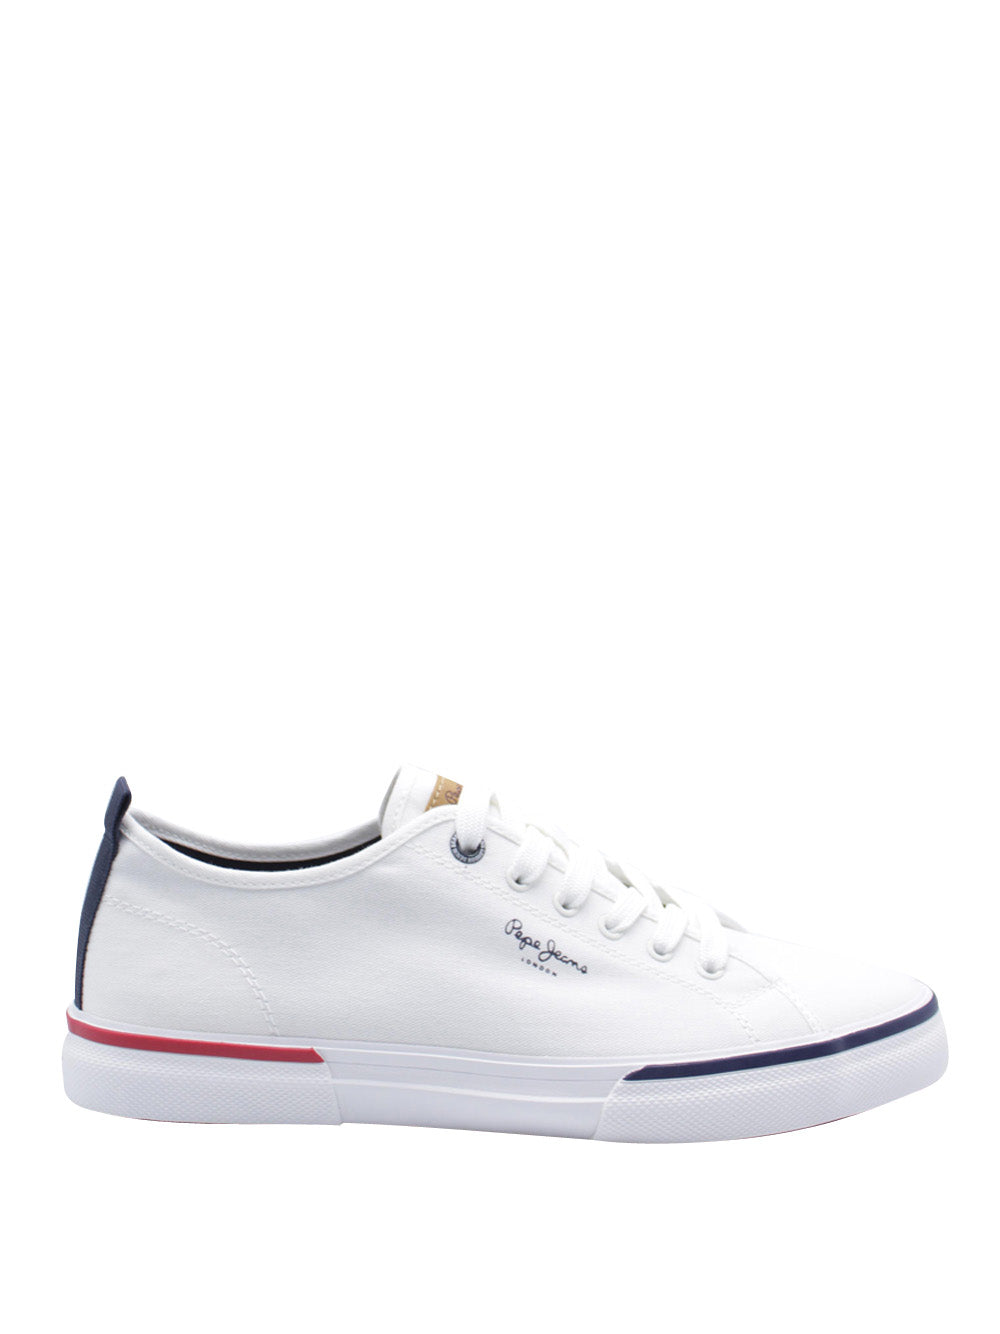 PEPE JEANS Sneakers Uomo - Bianco modello PMS30811